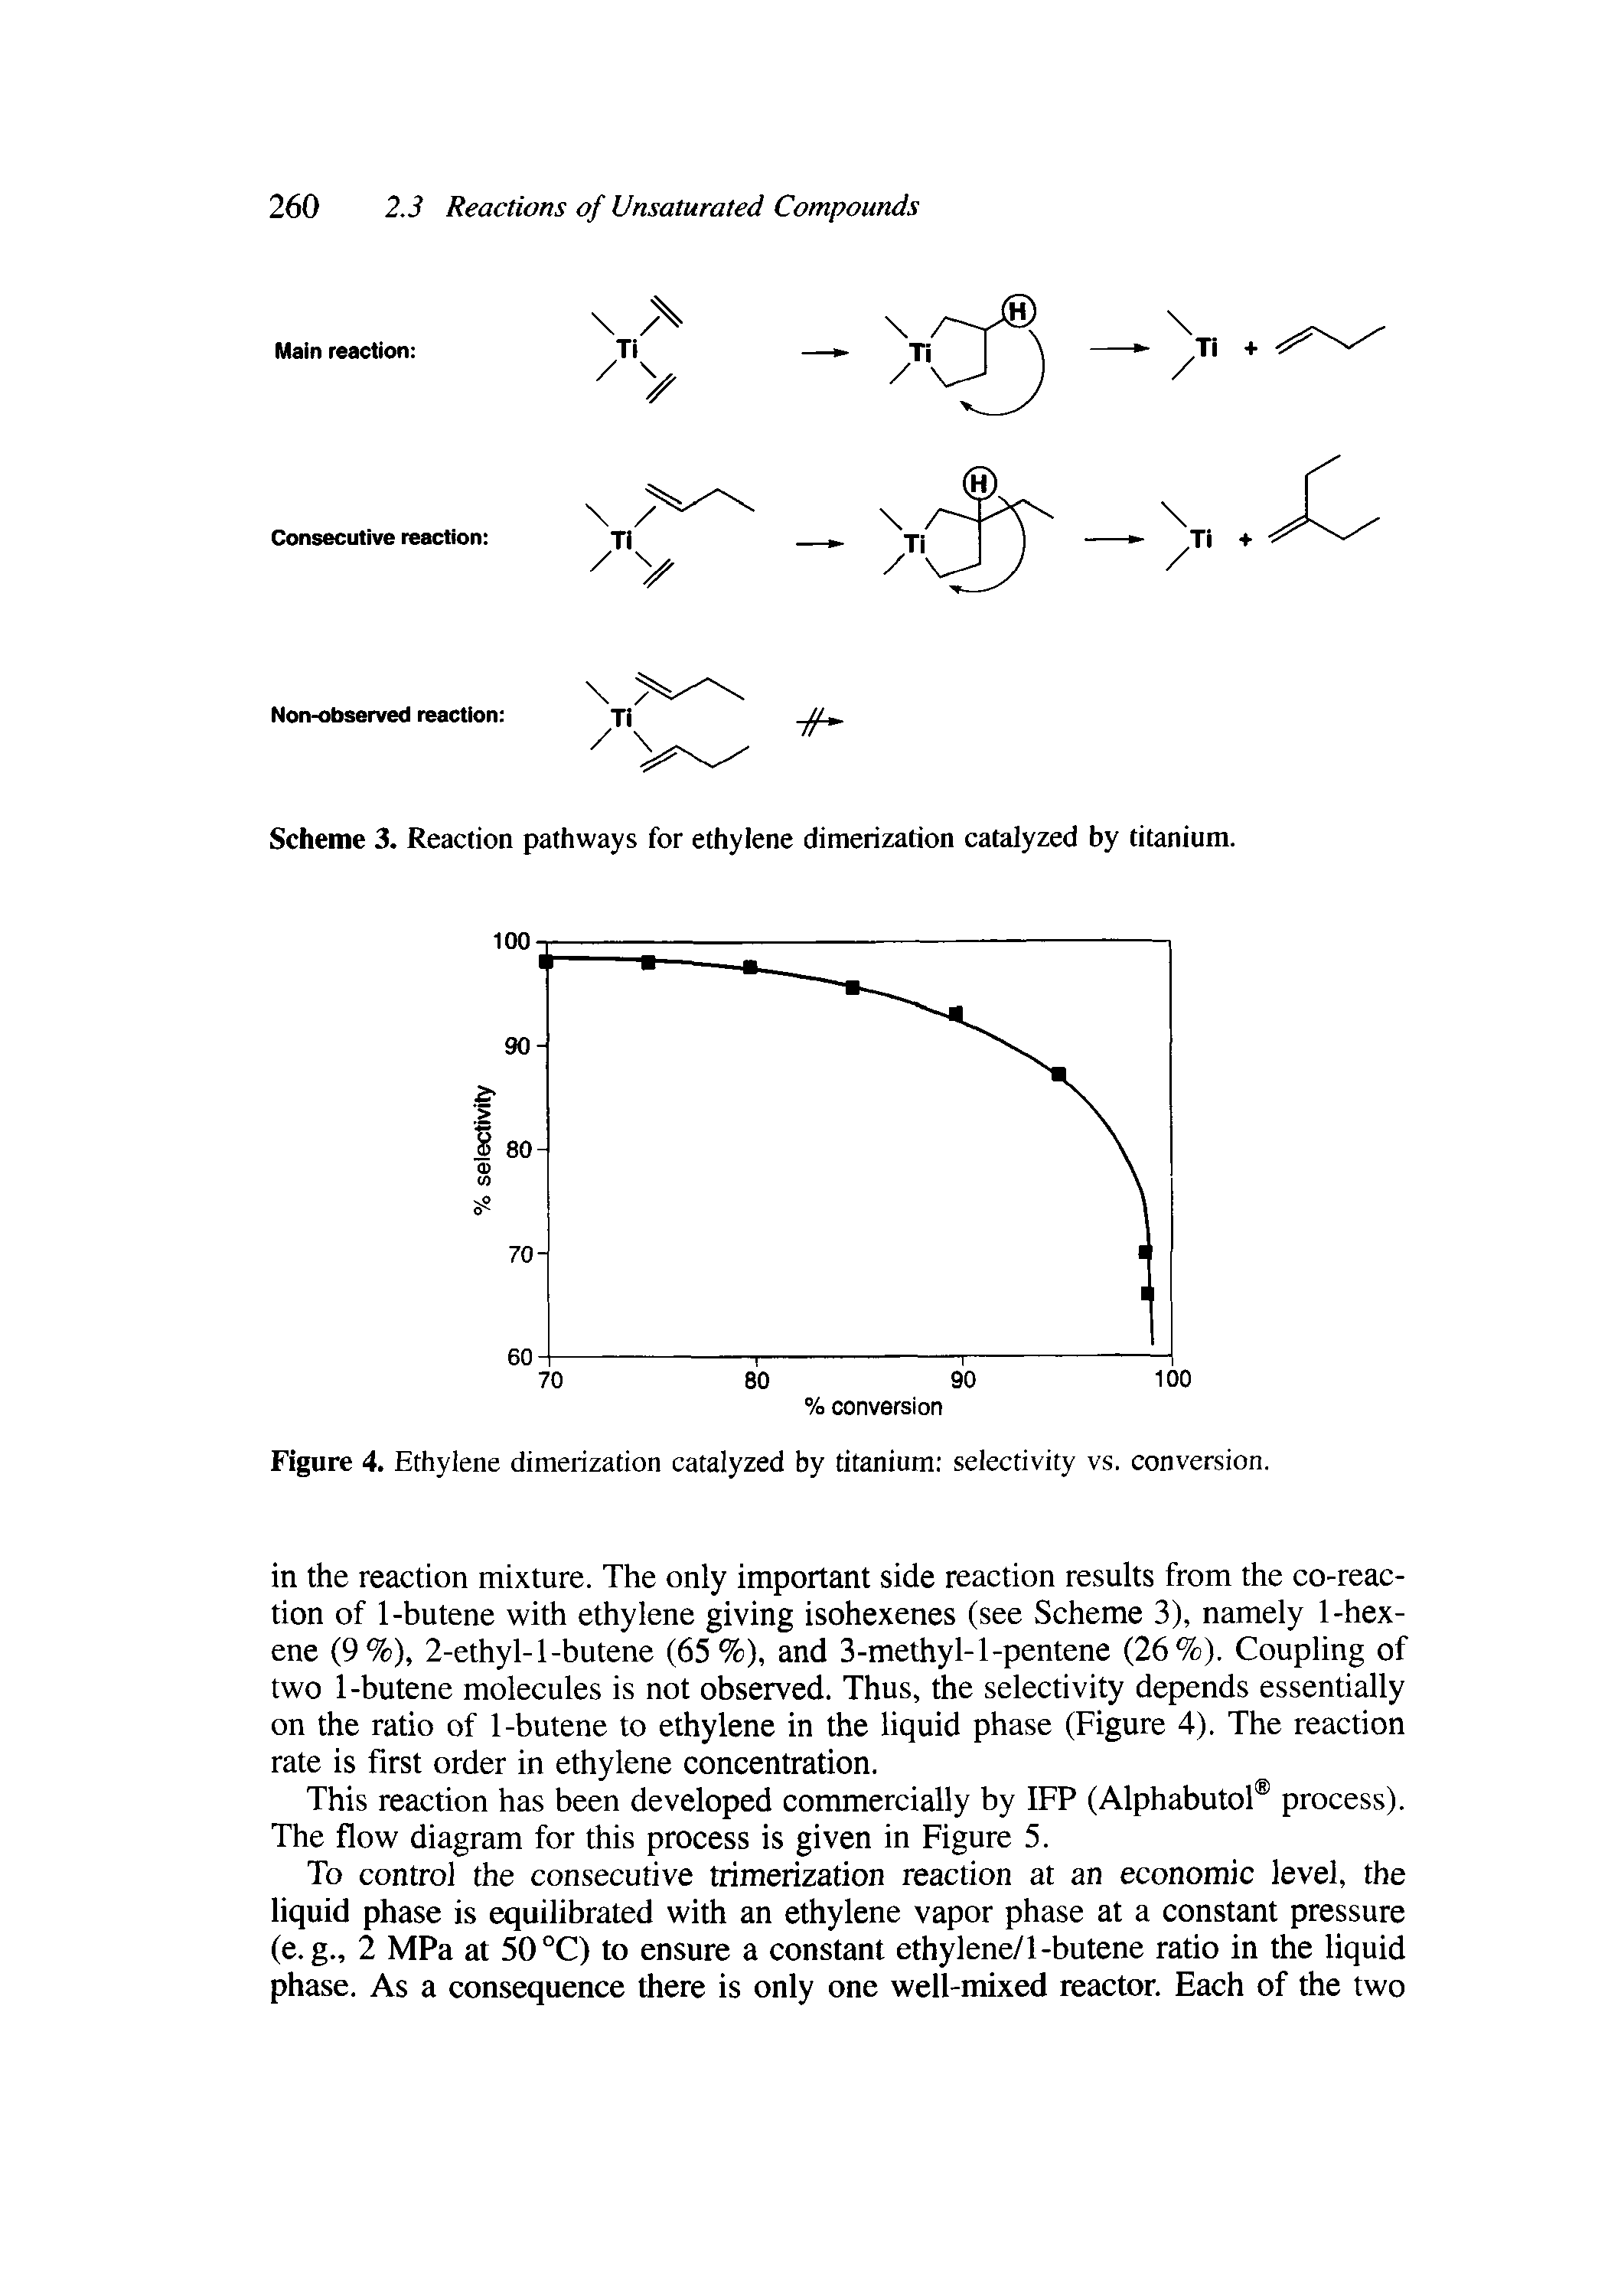 Figure 4. Ethylene dimerization catalyzed by titanium selectivity vs. conversion.